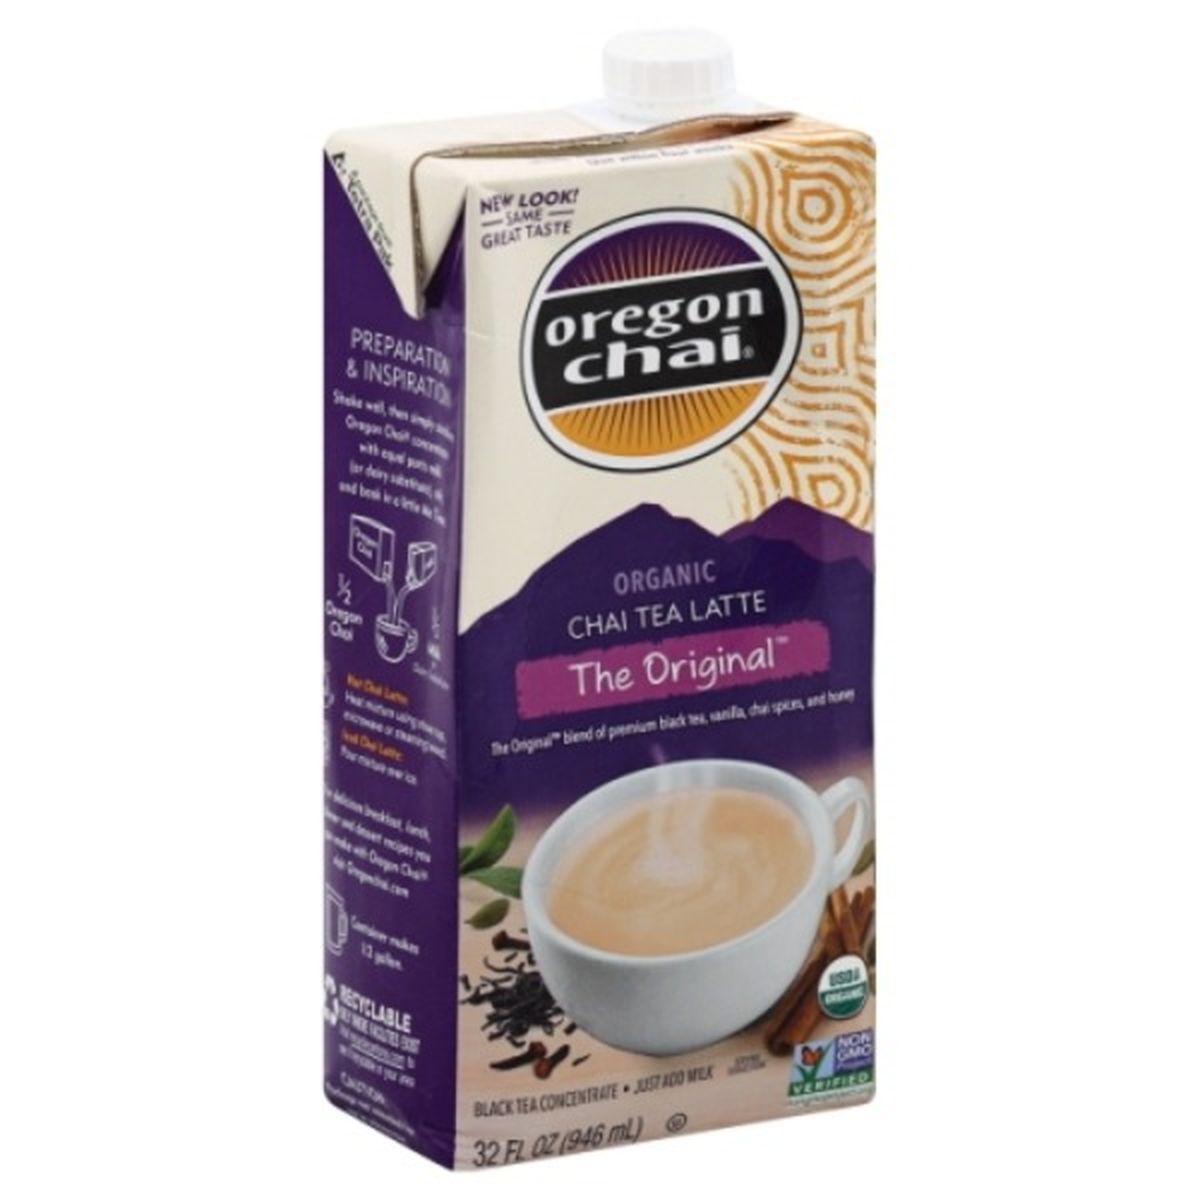 Calories in Oregon Chai Chai Tea Latte, Organic, The Original